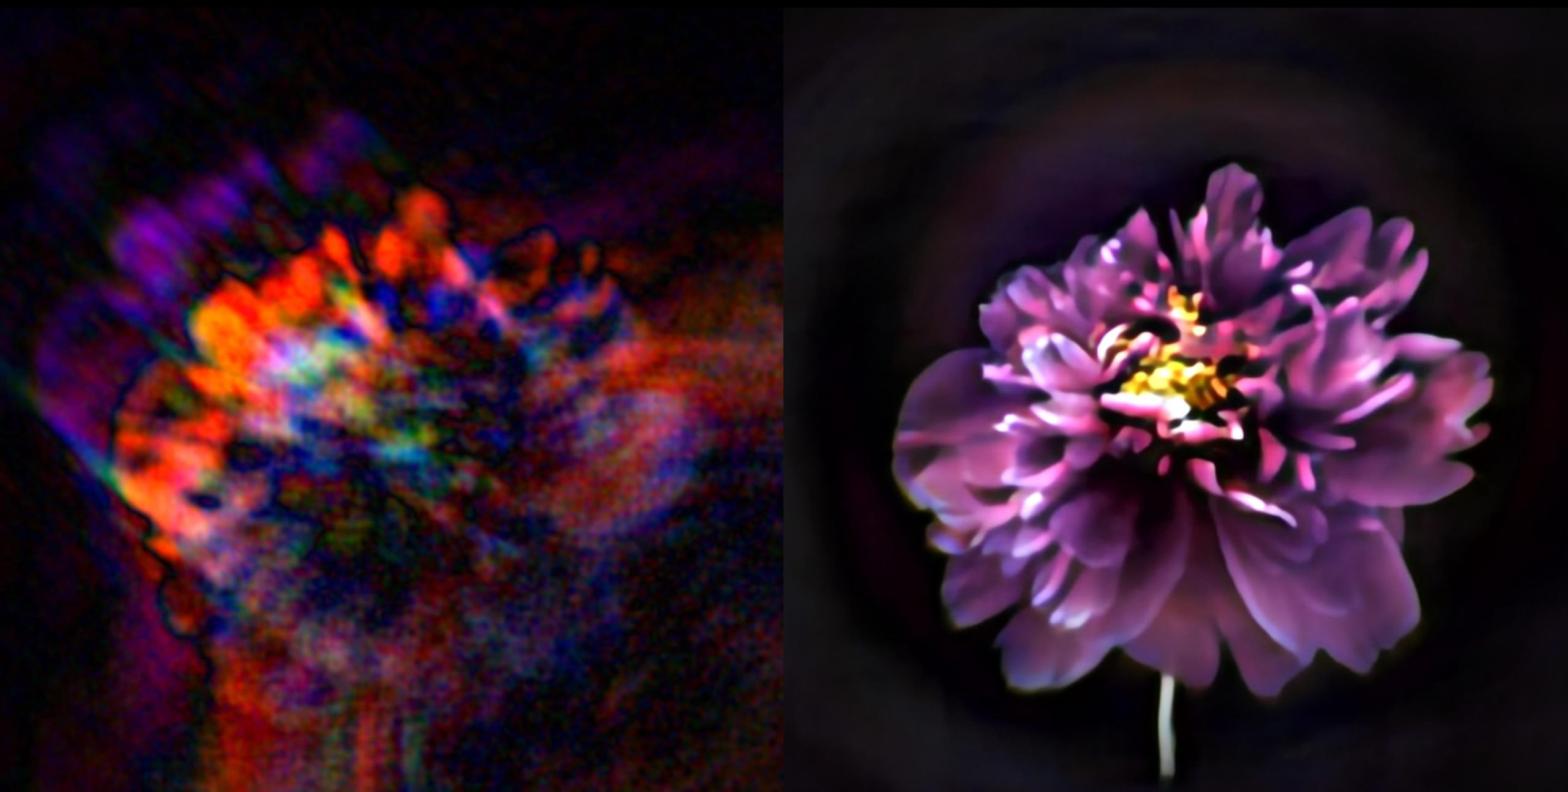 The neural nano-optical camera's output (right) compared to a previous metasurface cameras (left). (Image: Princeton University Computational Imaging Lab)